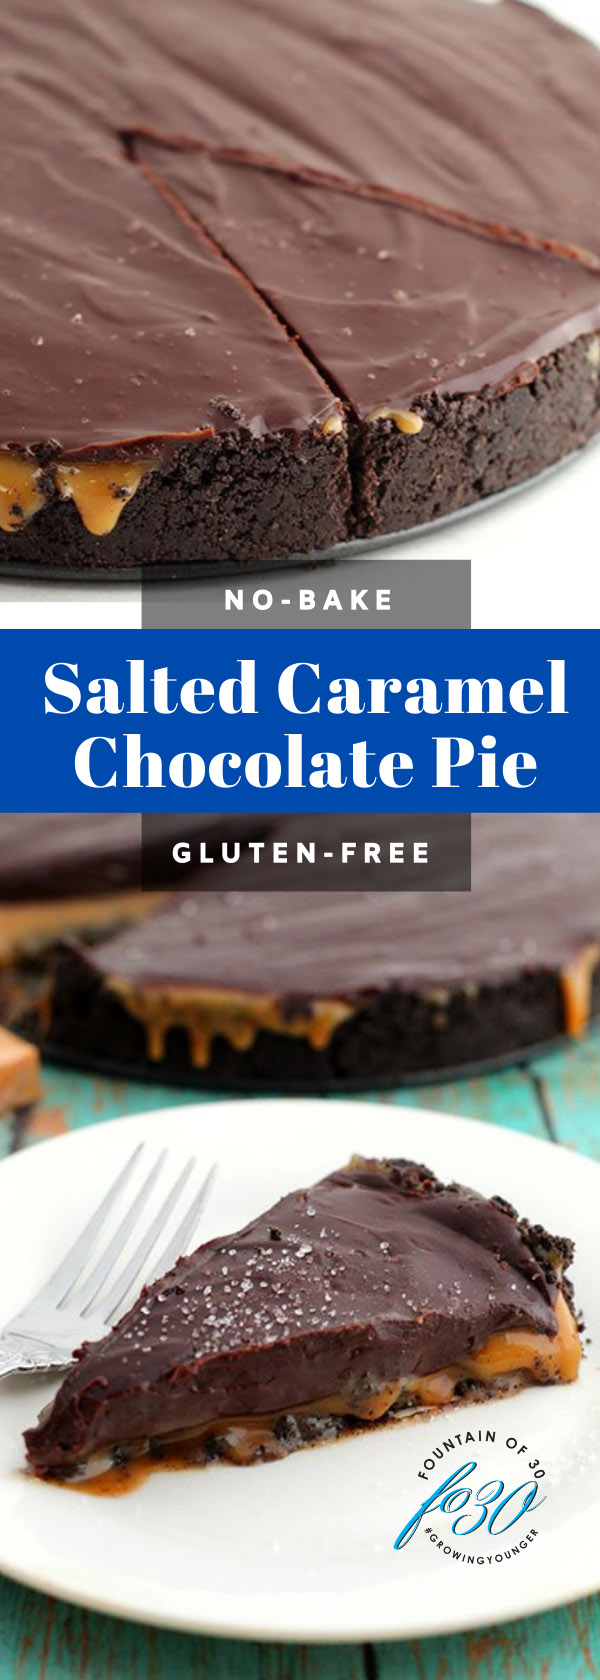 no-bake salted caramel chocolate pie fountainofd30